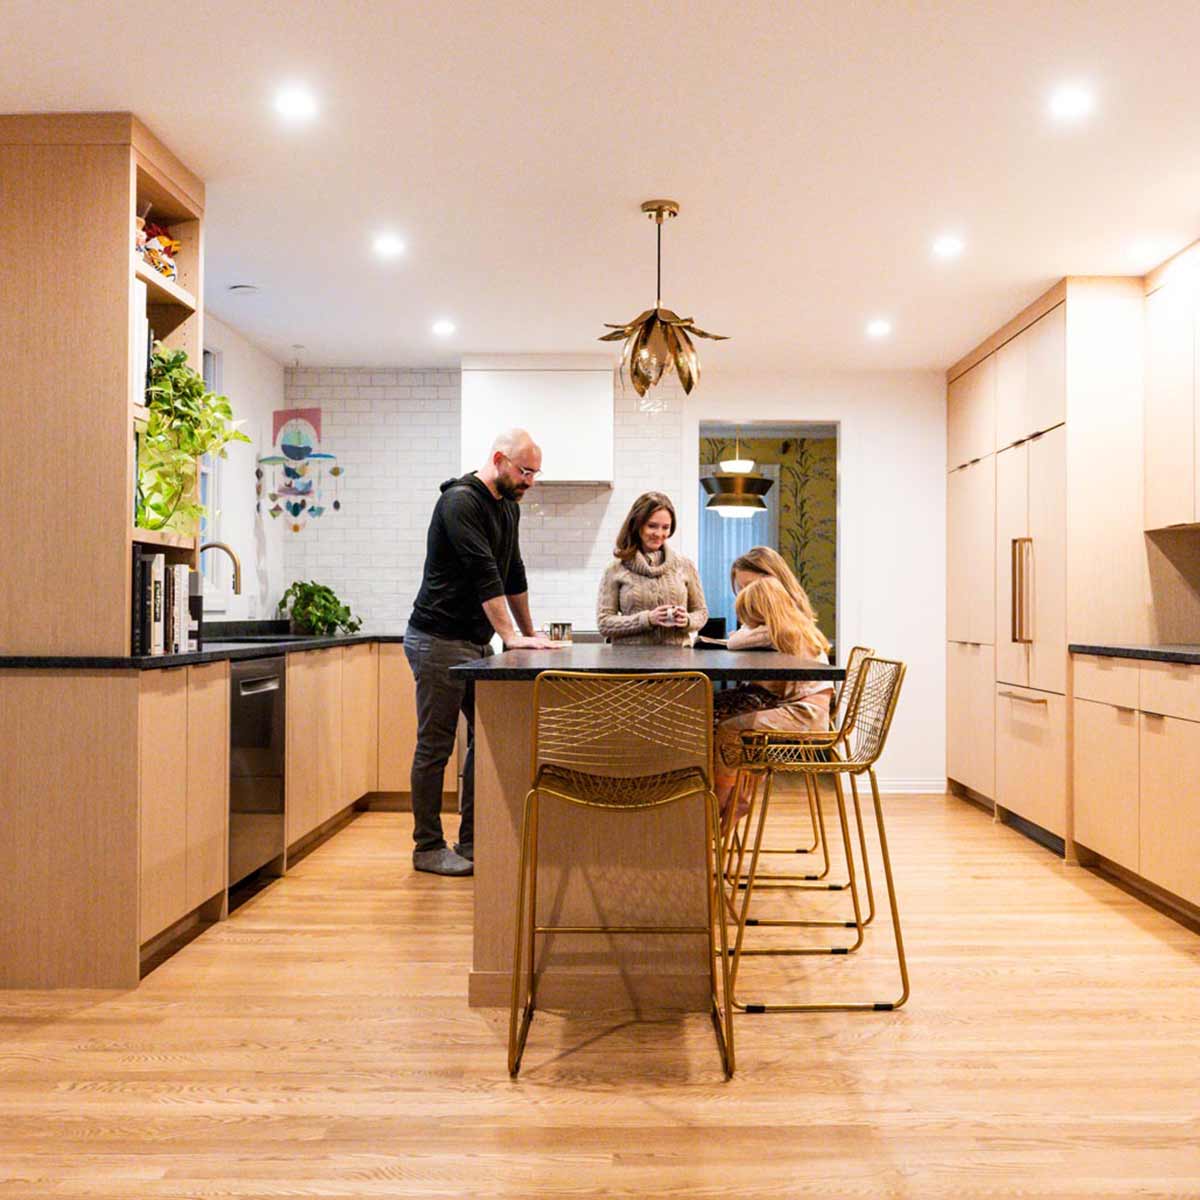 family in luxury kitchen remodel in Riverside, IL featuring a social kitchen island in white oak